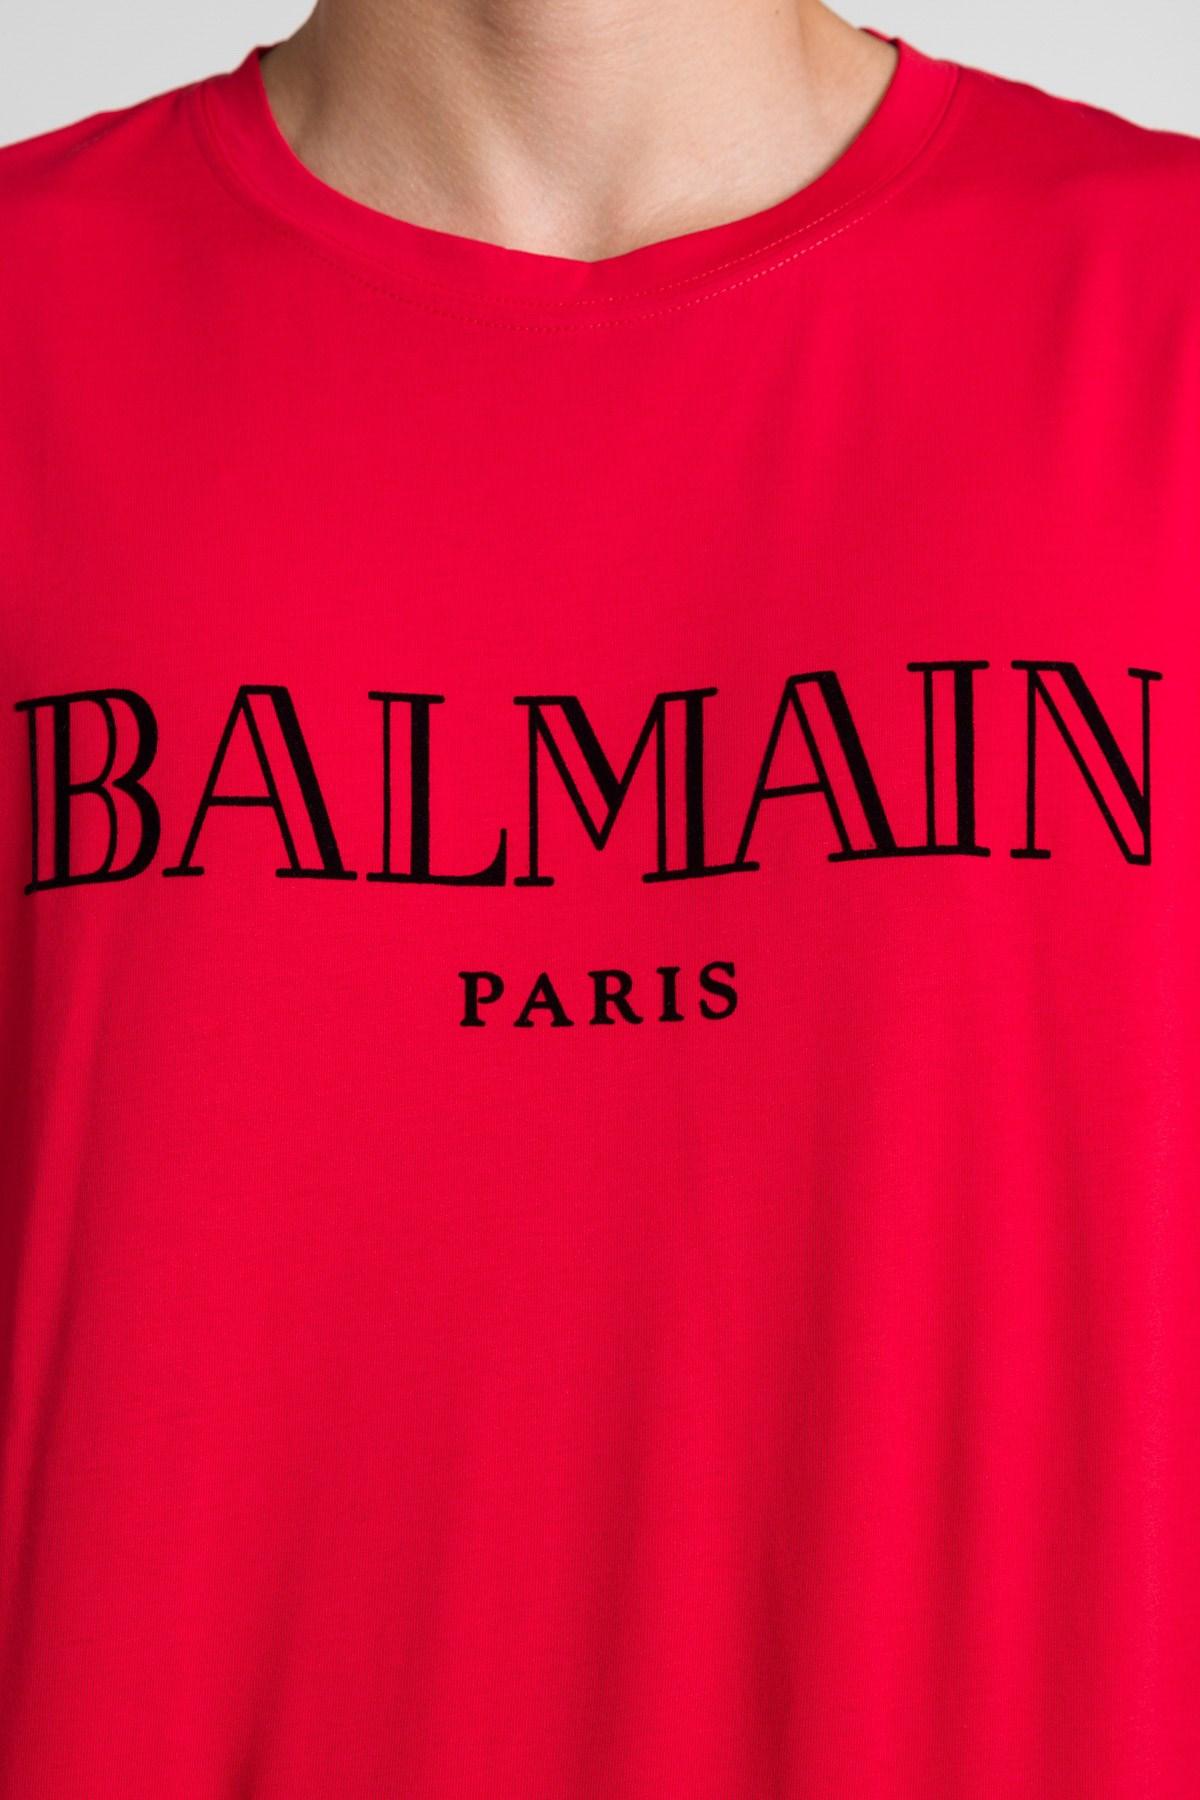 Balmain Cotton ' Logo' Print T-shirt in Red for Men - Lyst